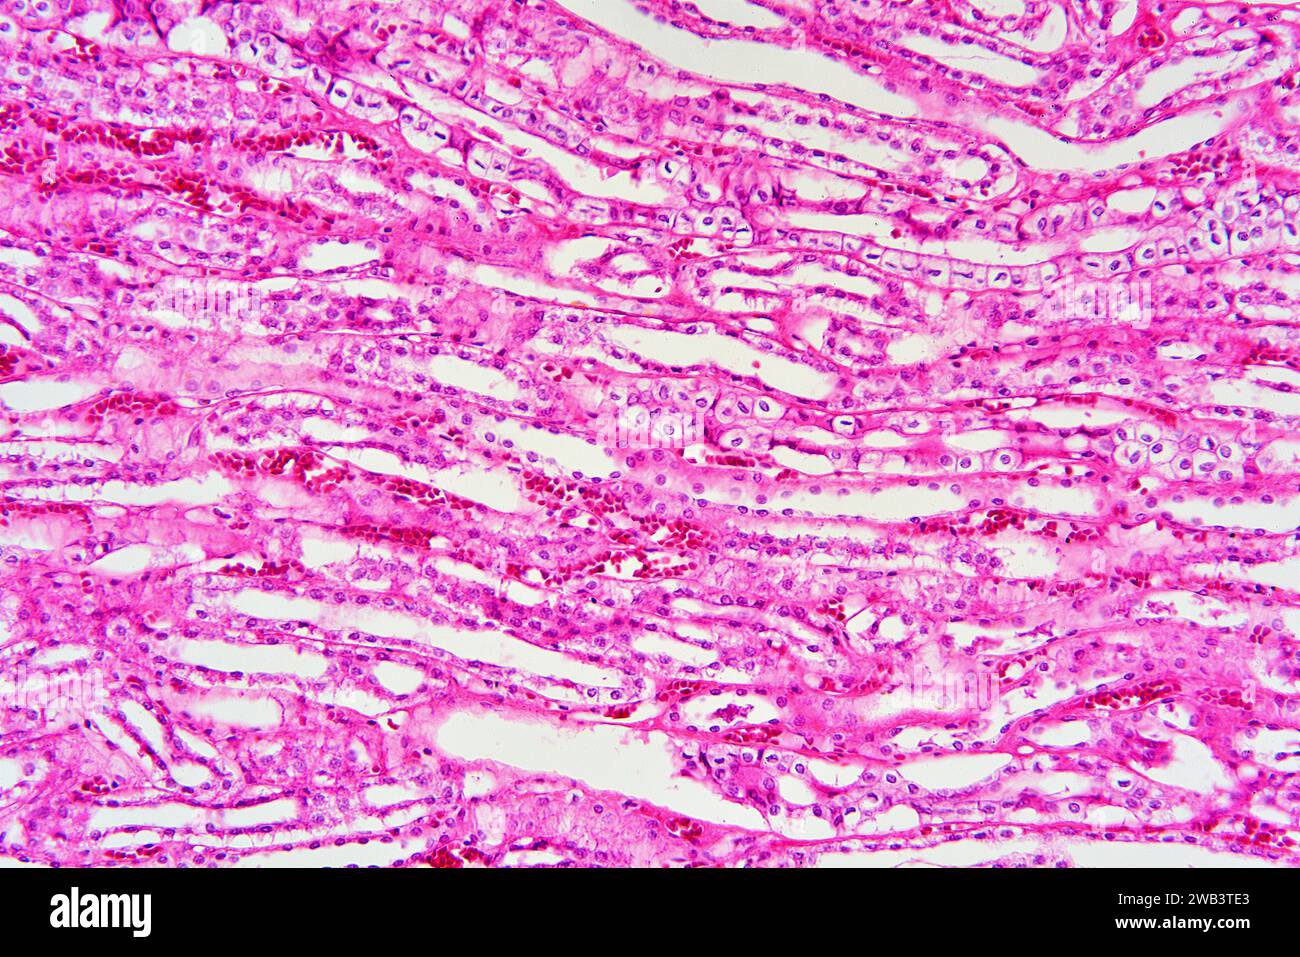 Human cuboidal epithelium of kidney. X75 at 10 cm wide. Stock Photo